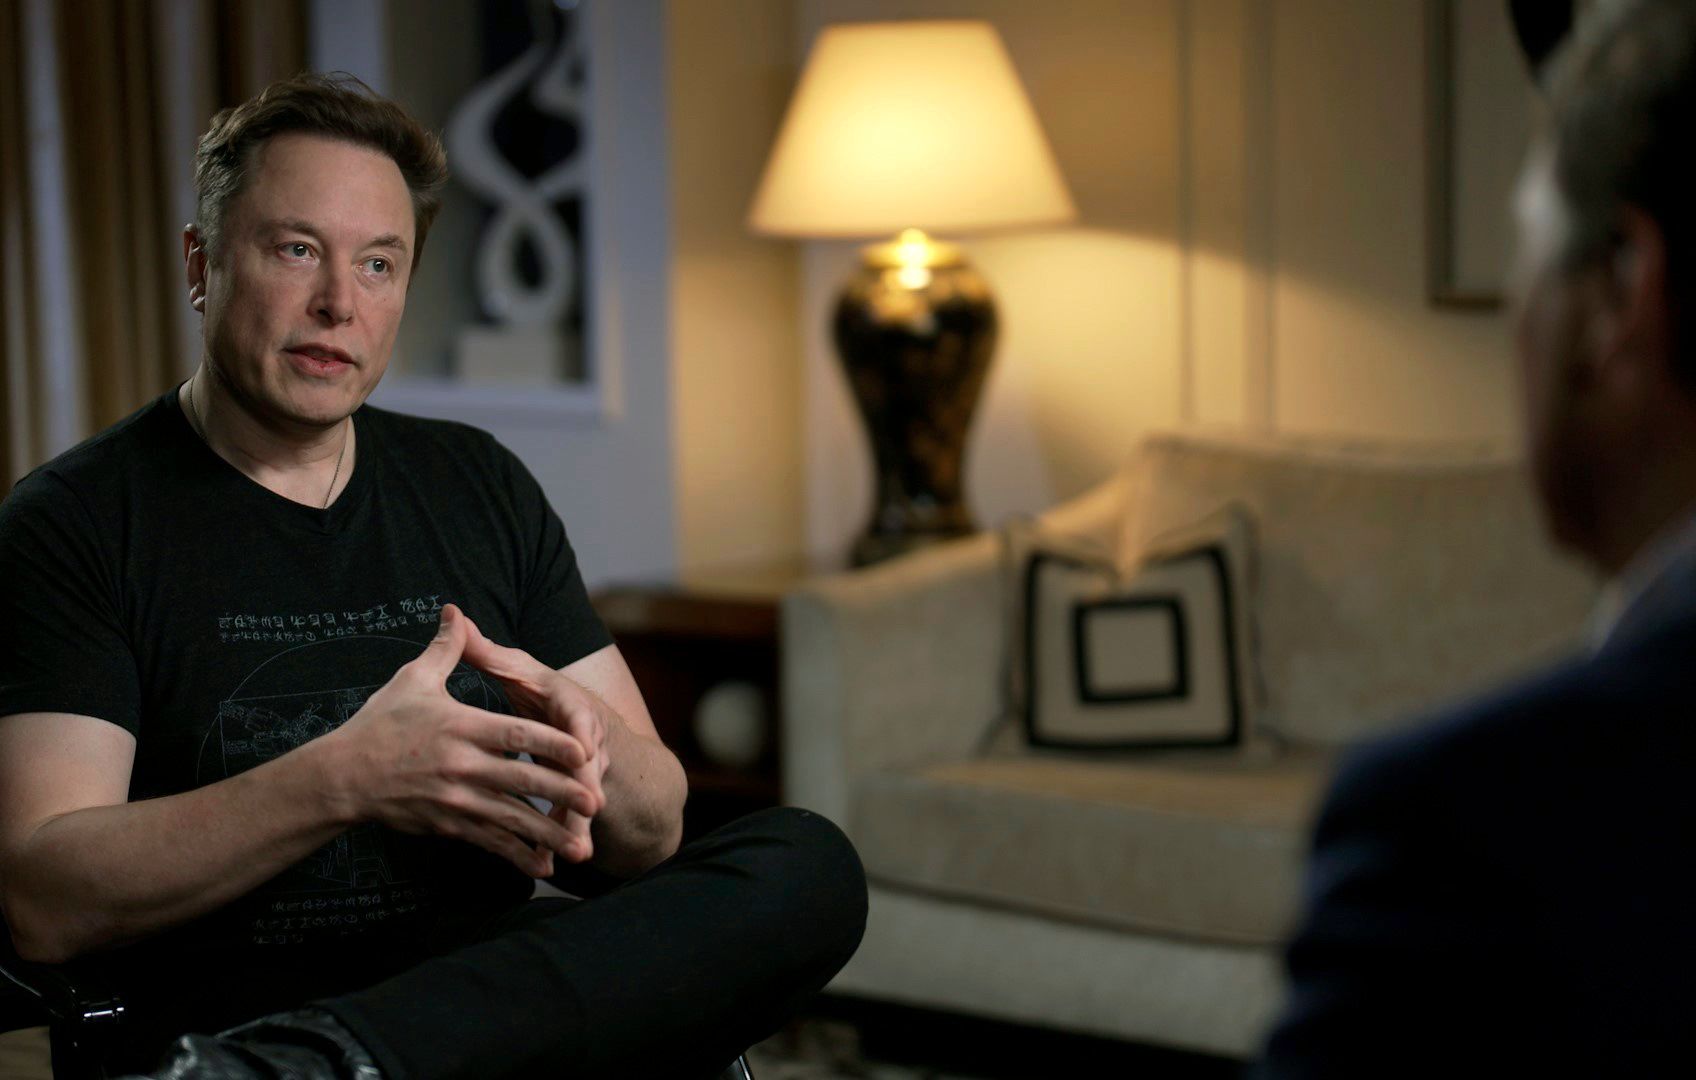 Elon Musk wants to build a "maximum truth-seeking AI" called TruthGPT